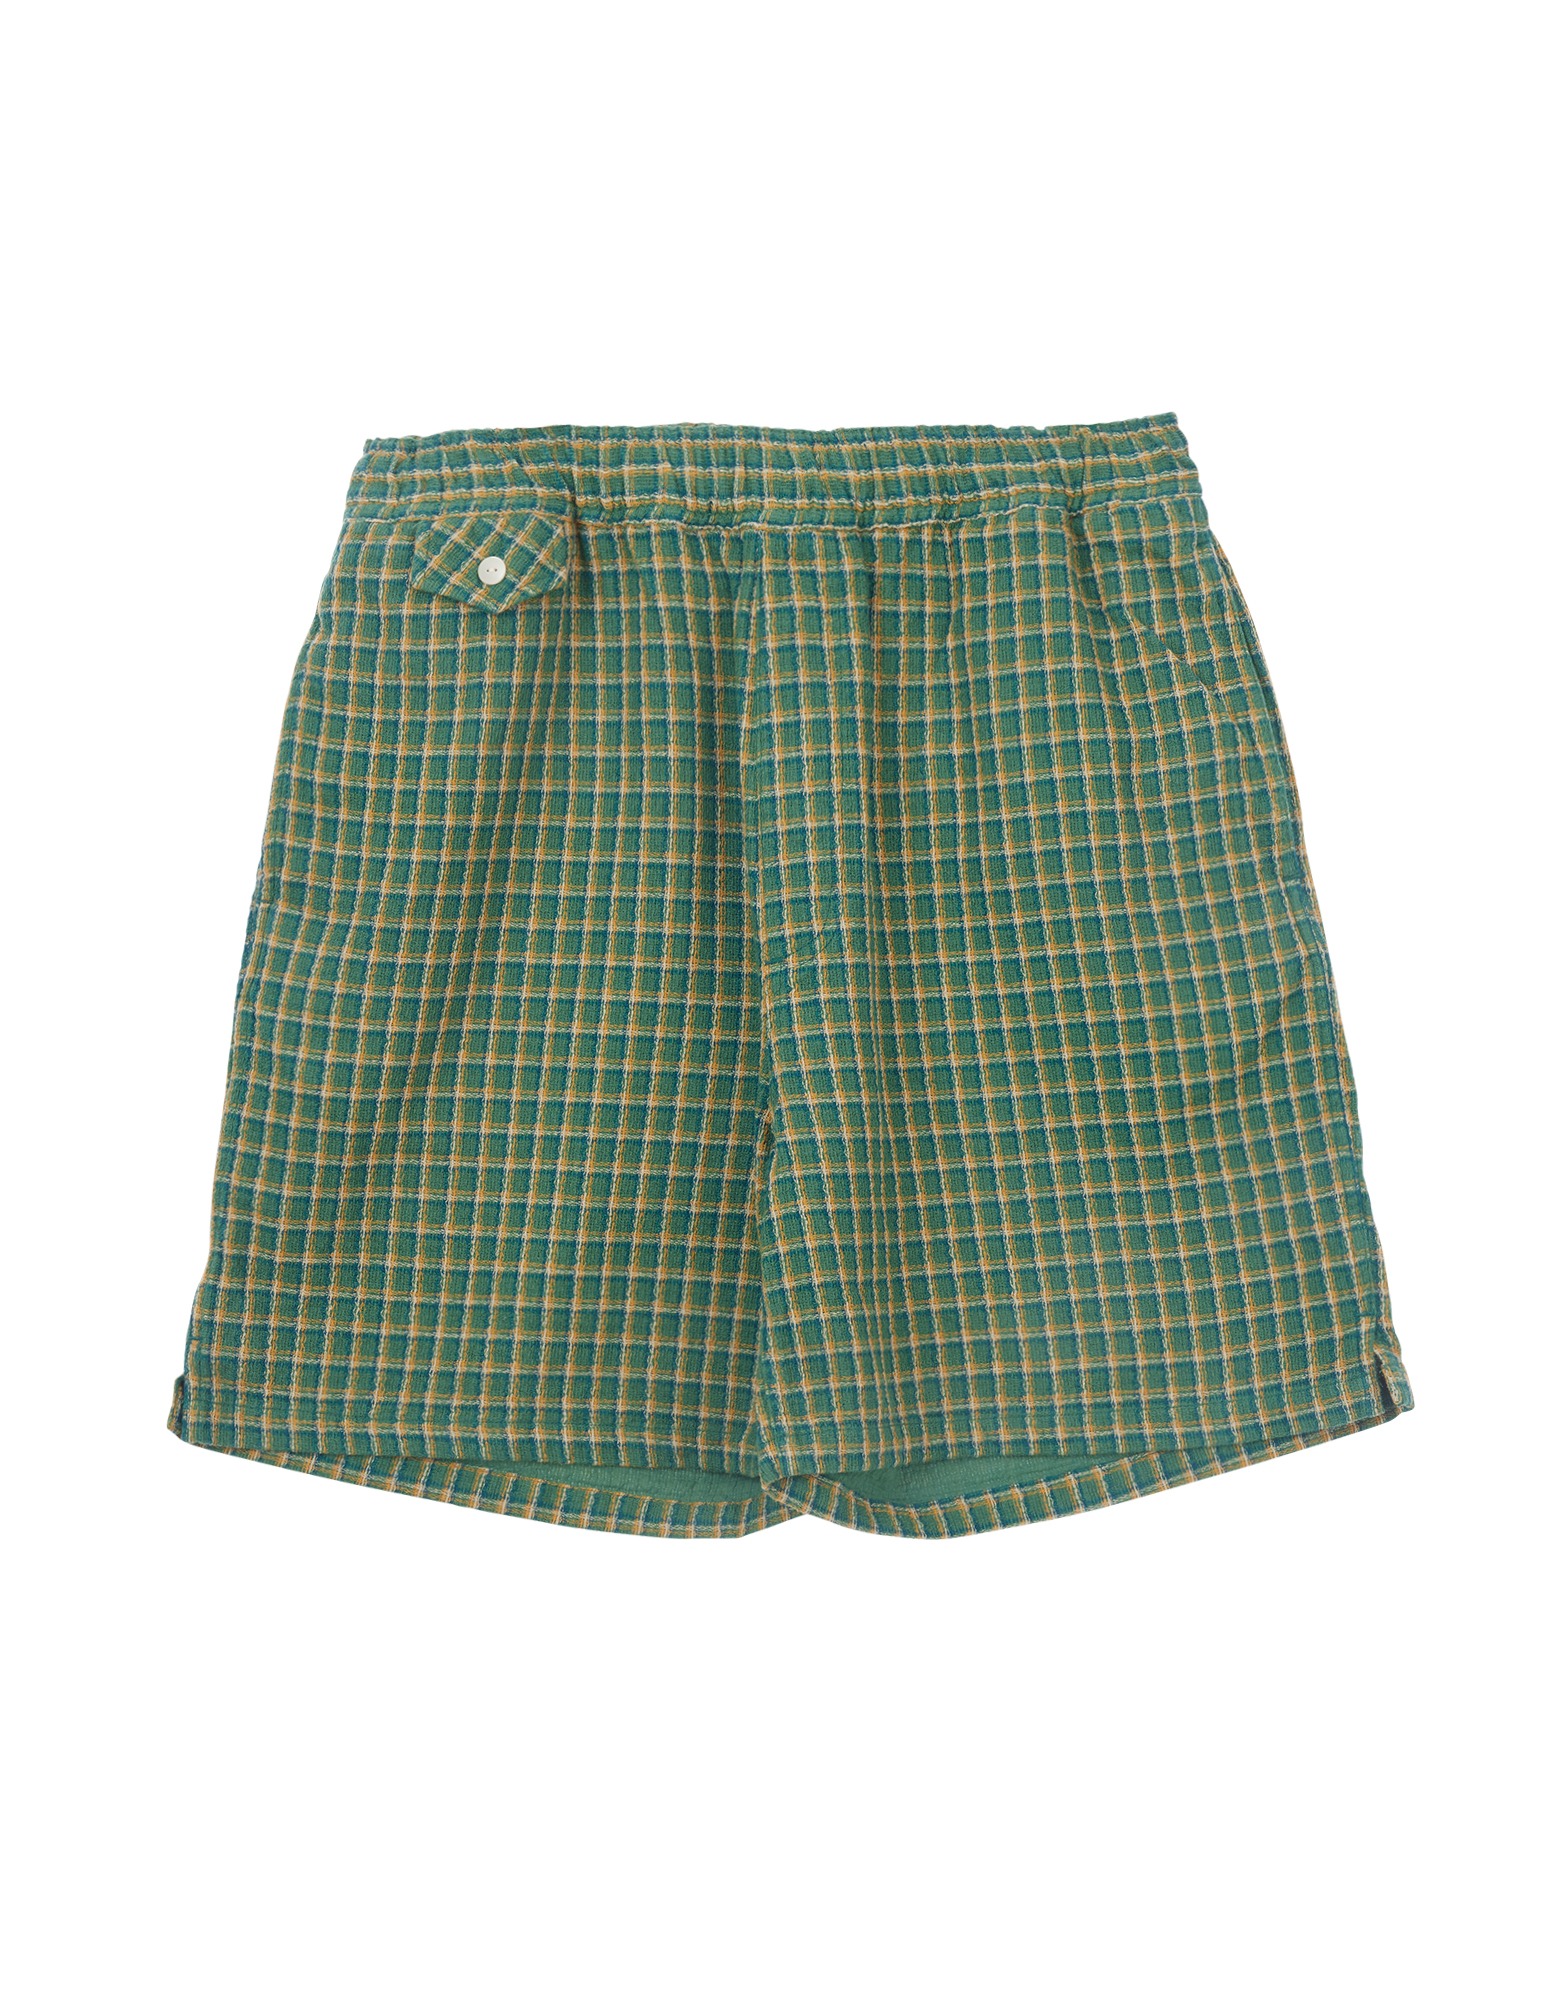 Double Gauze Check Shorts (Green)